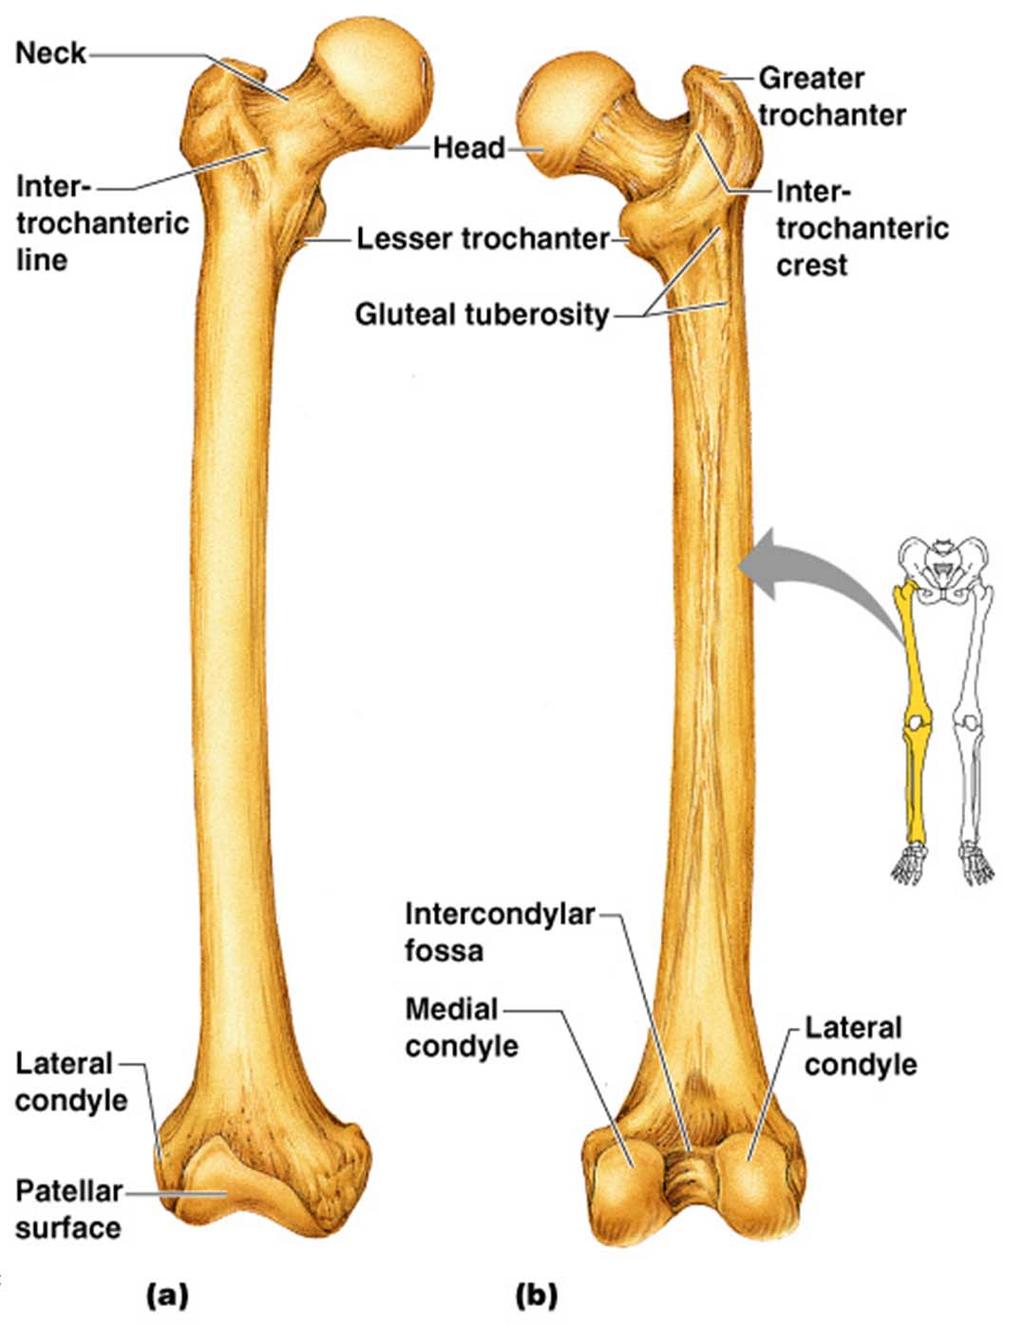 D. Bones of Lower Limbs 1.